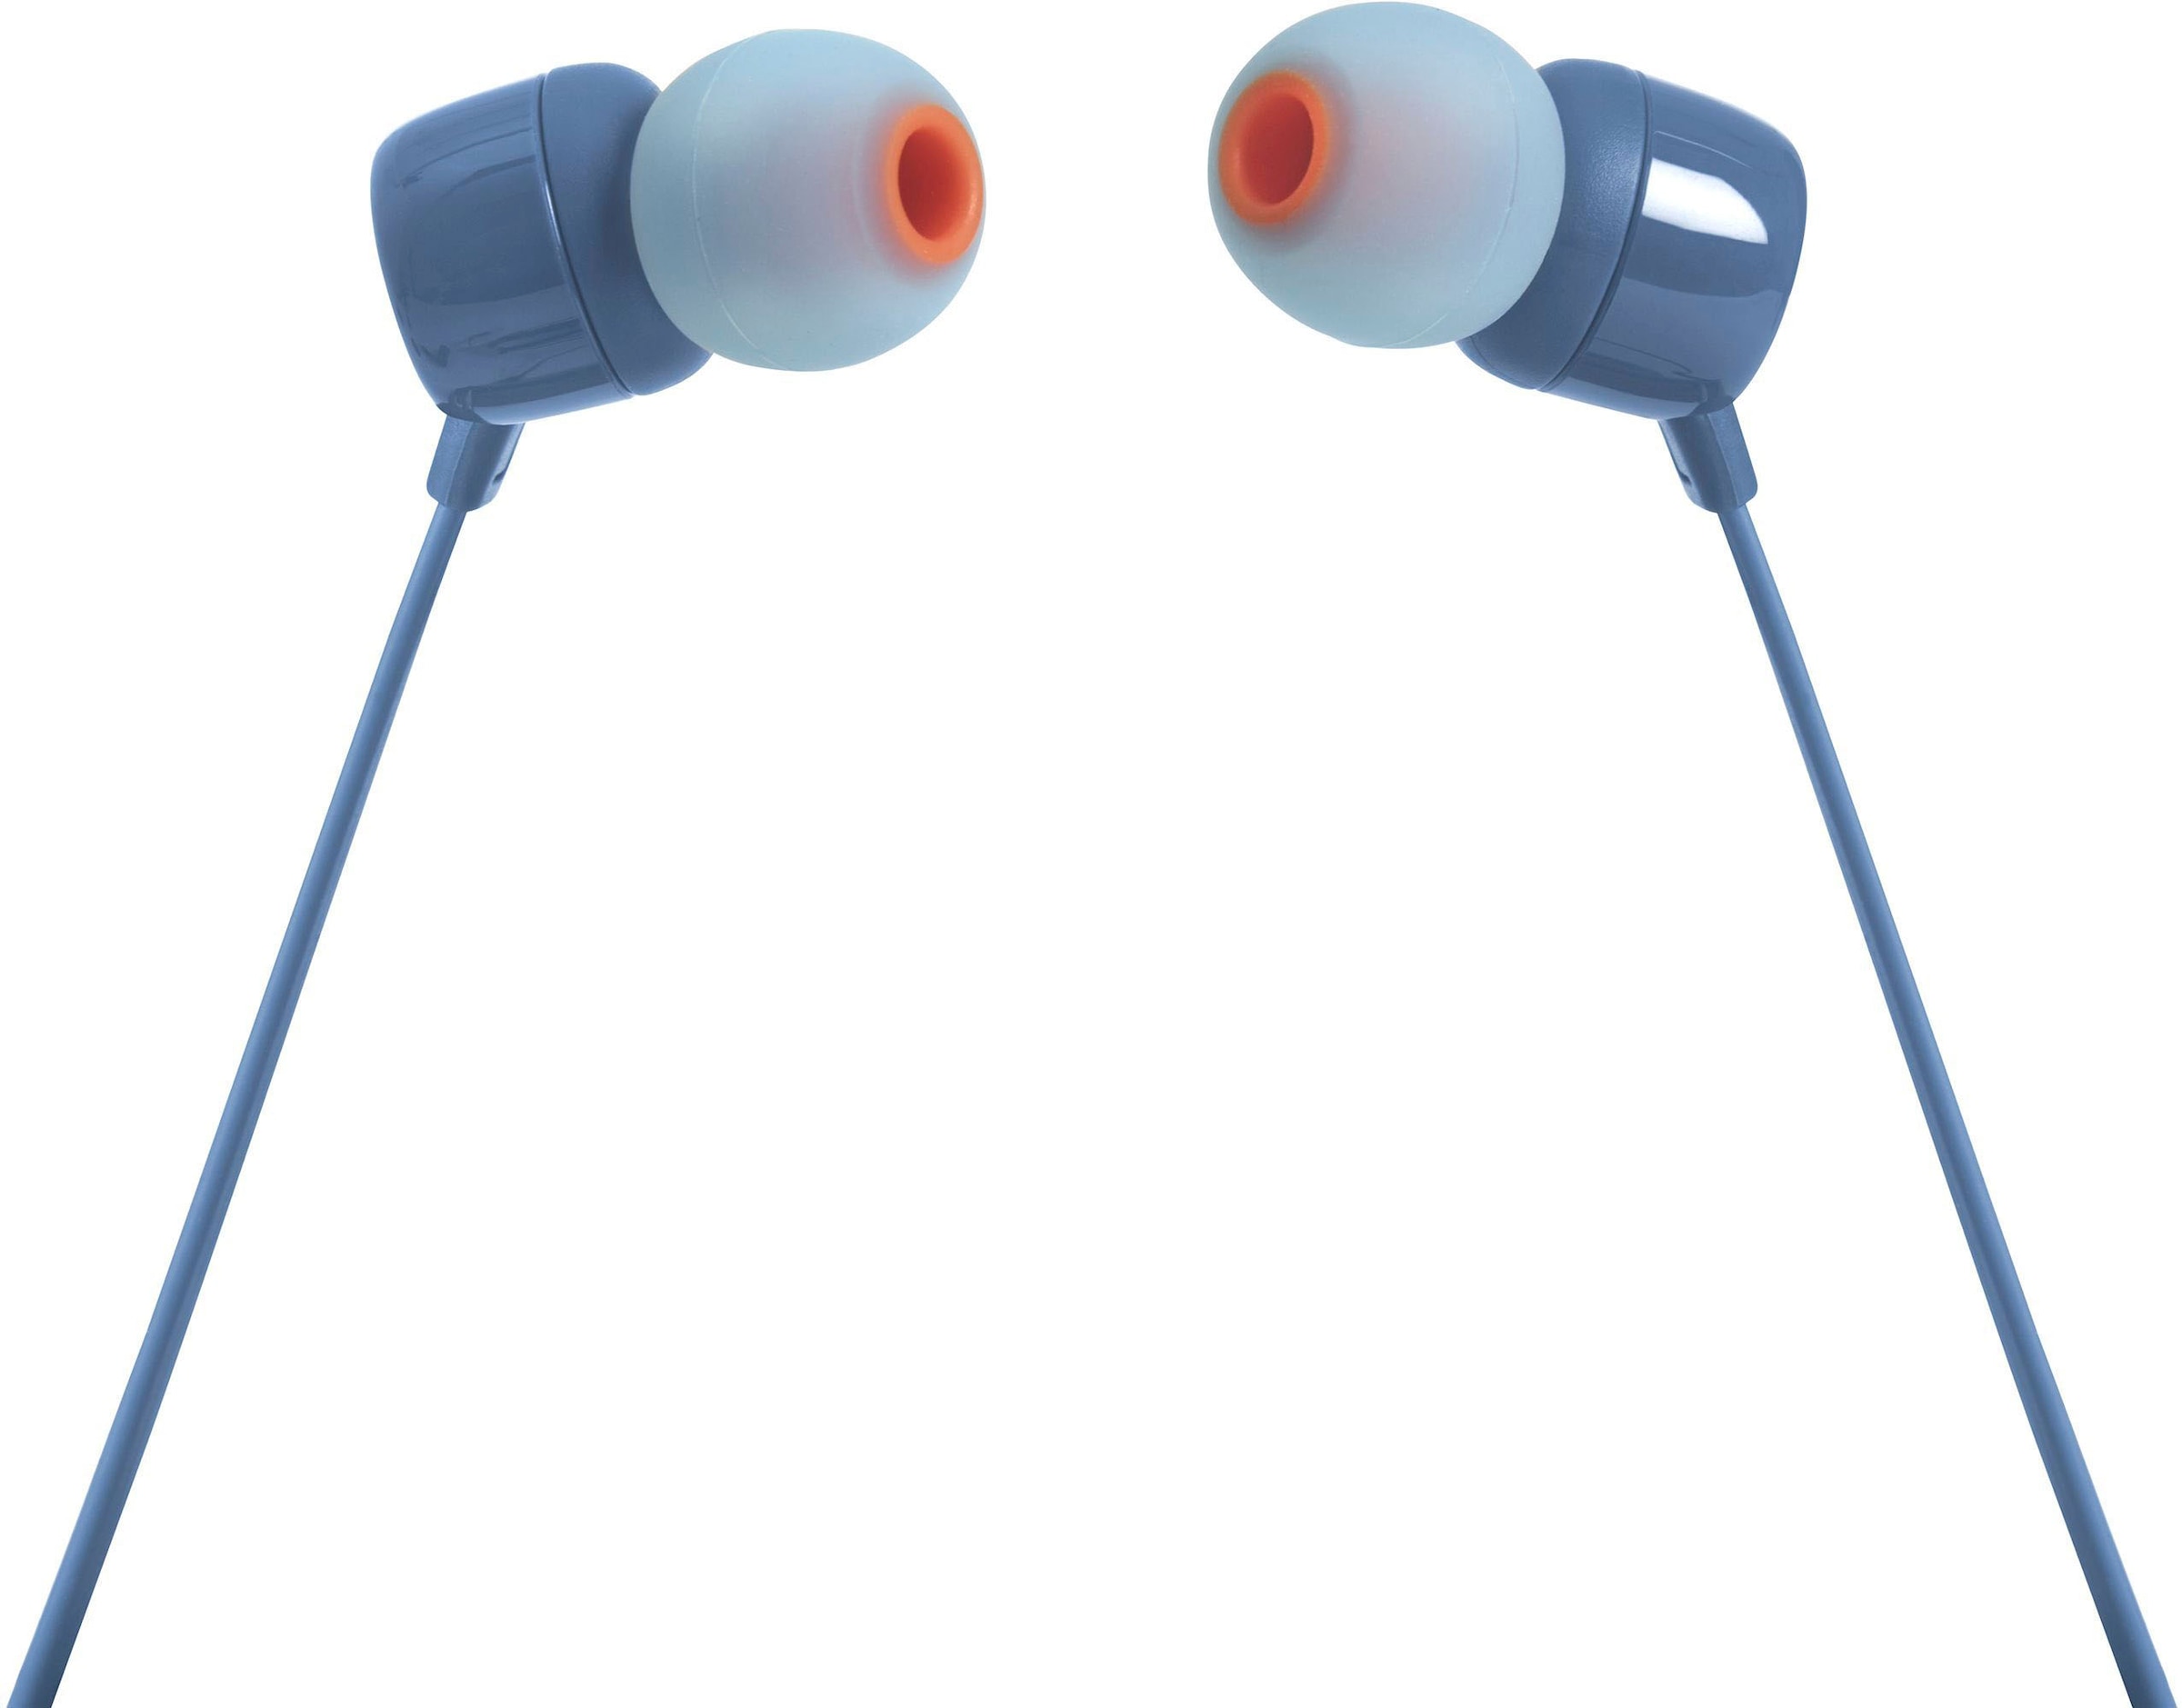 JBL In-Ear-Kopfhörer kaufen »T110« jetzt OTTO bei